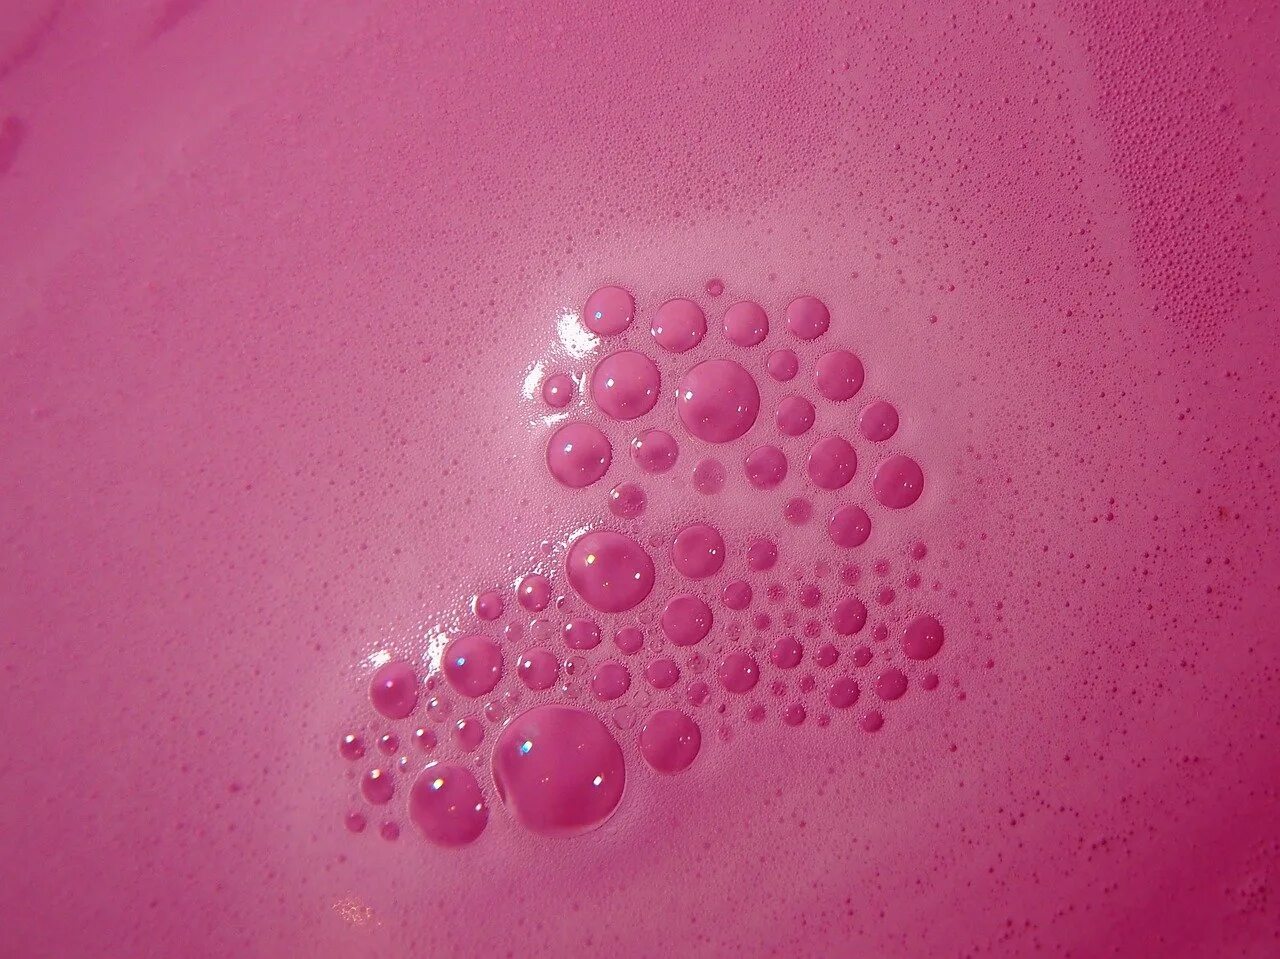 Малиновая мокрота. Розовая мыльная пена. Розовые пузыри. Перистая розовая иокрота. Красивая пена мыльная.